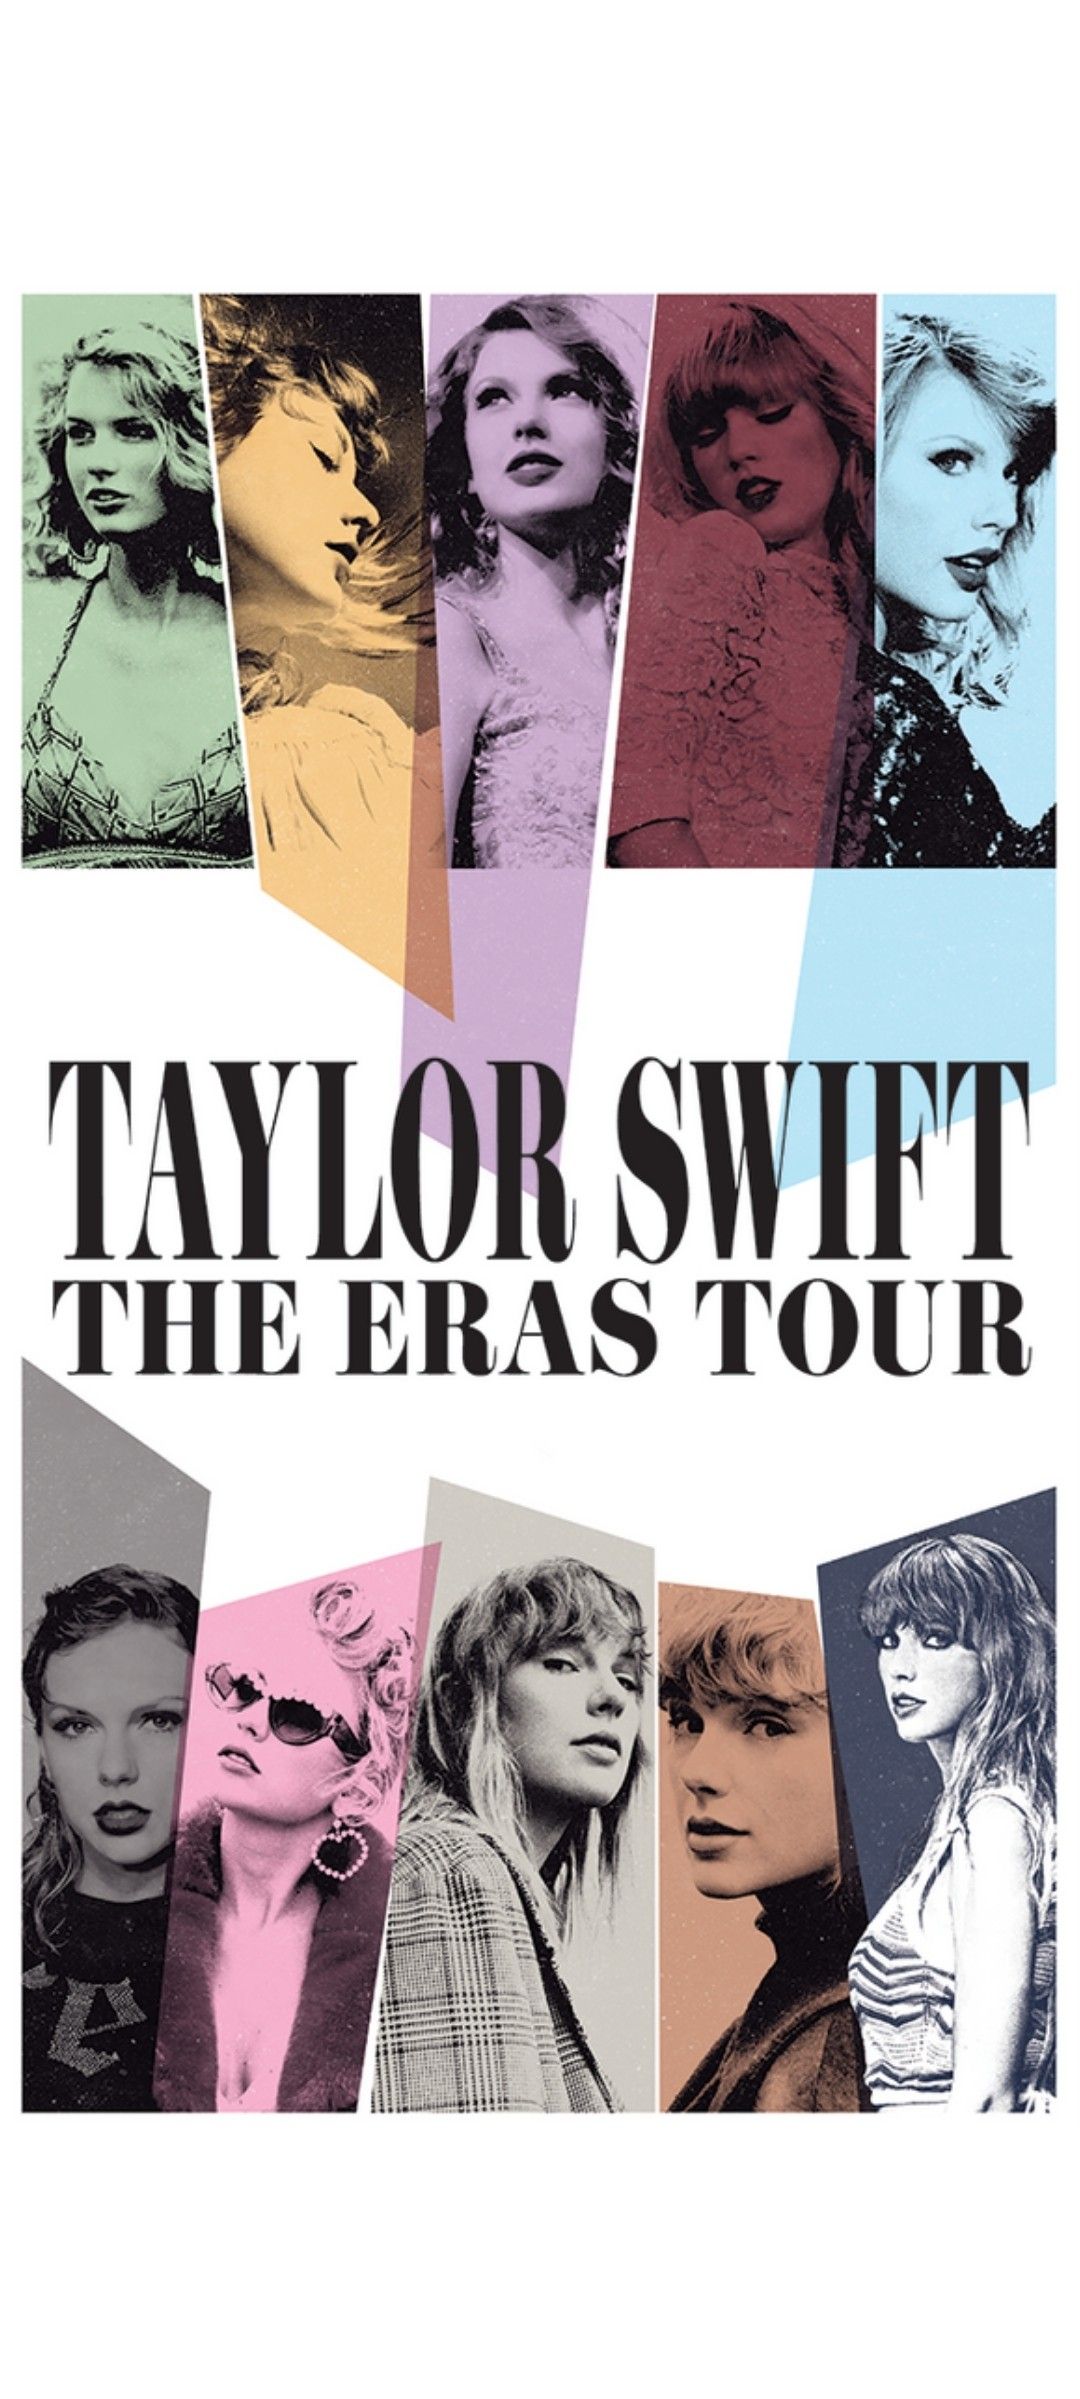 The Eras Tour Wallpaper. Taylor swift wallpaper, Taylor swfit, Swift tour